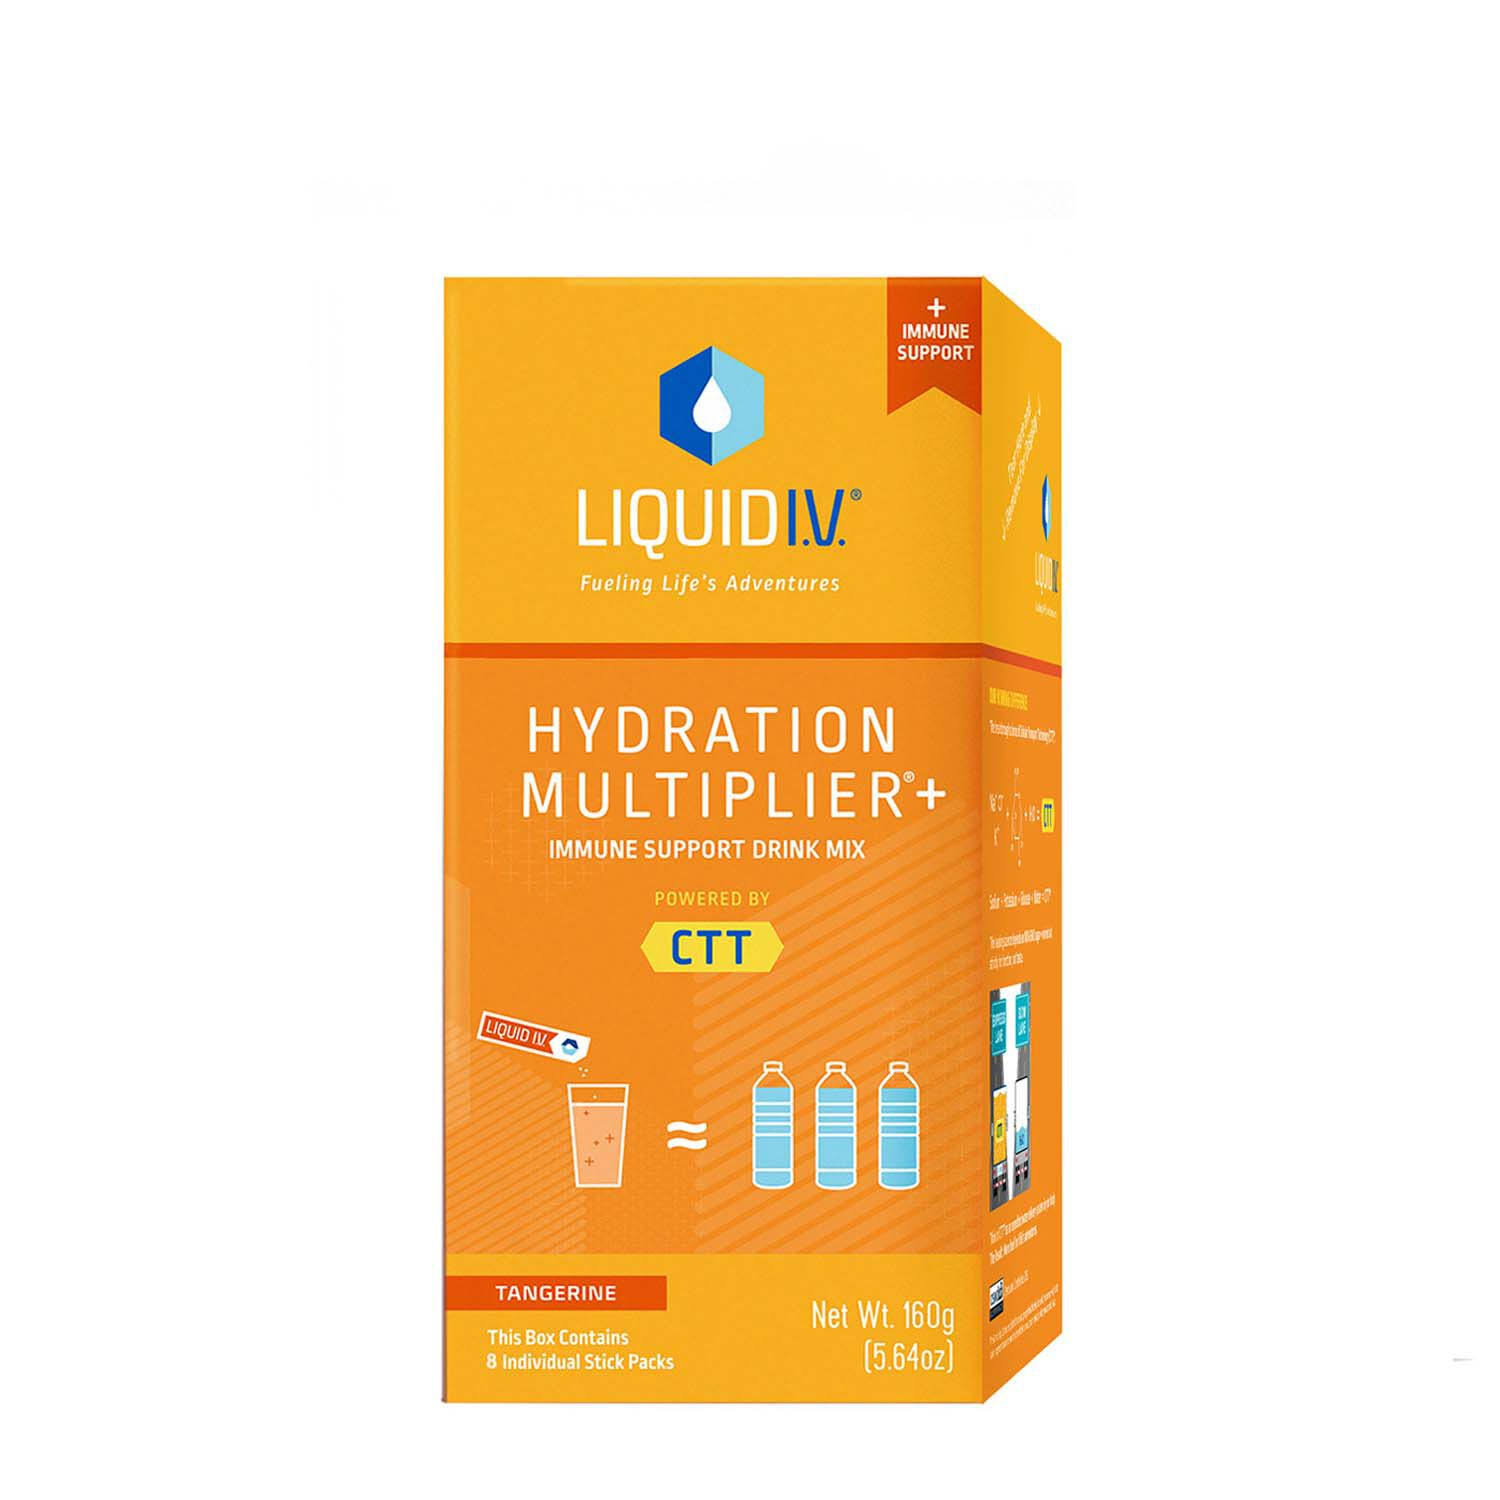 Liquid I.V. Hydration Multiplier Plus Immune Support Drink Mix, Tangerine - 8 stick packs, 128 g